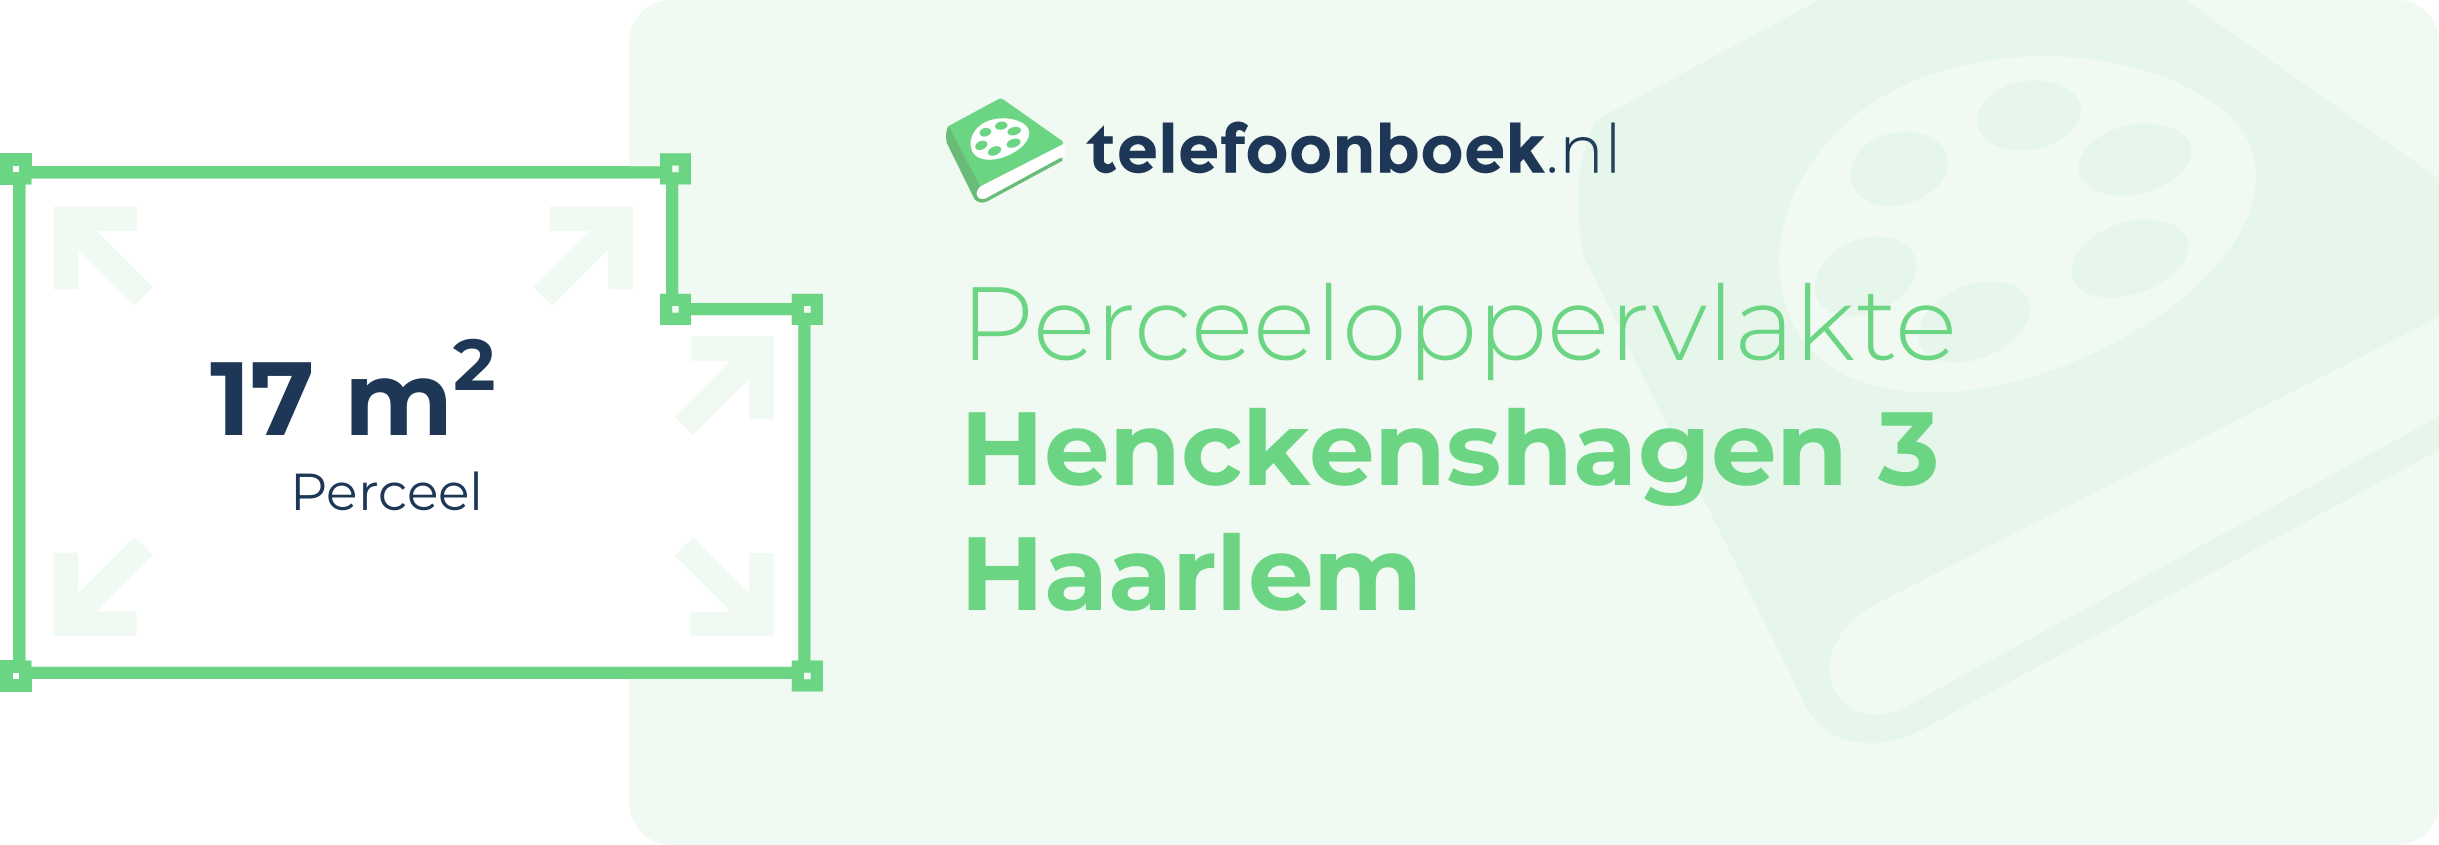 Perceeloppervlakte Henckenshagen 3 Haarlem